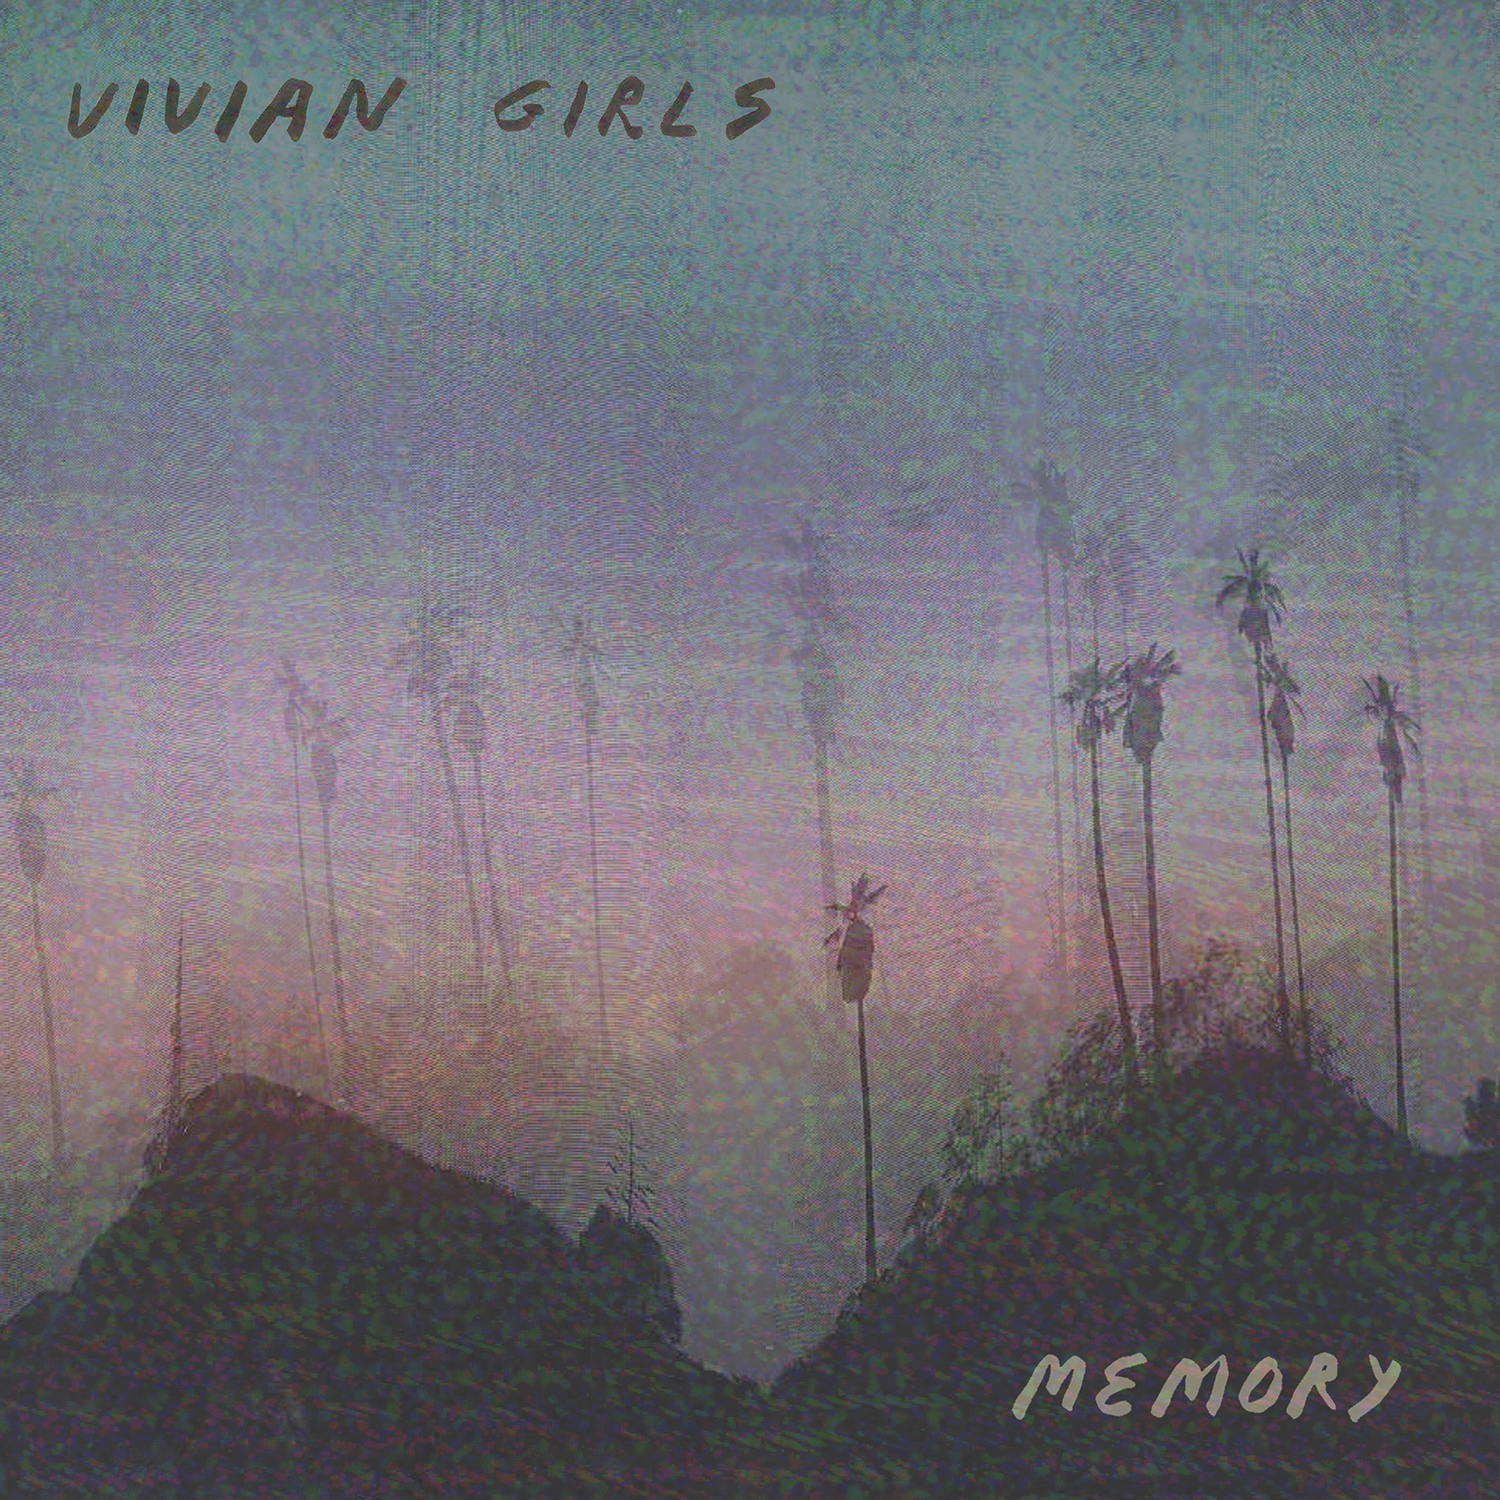 News – Vivian Girls – Memory